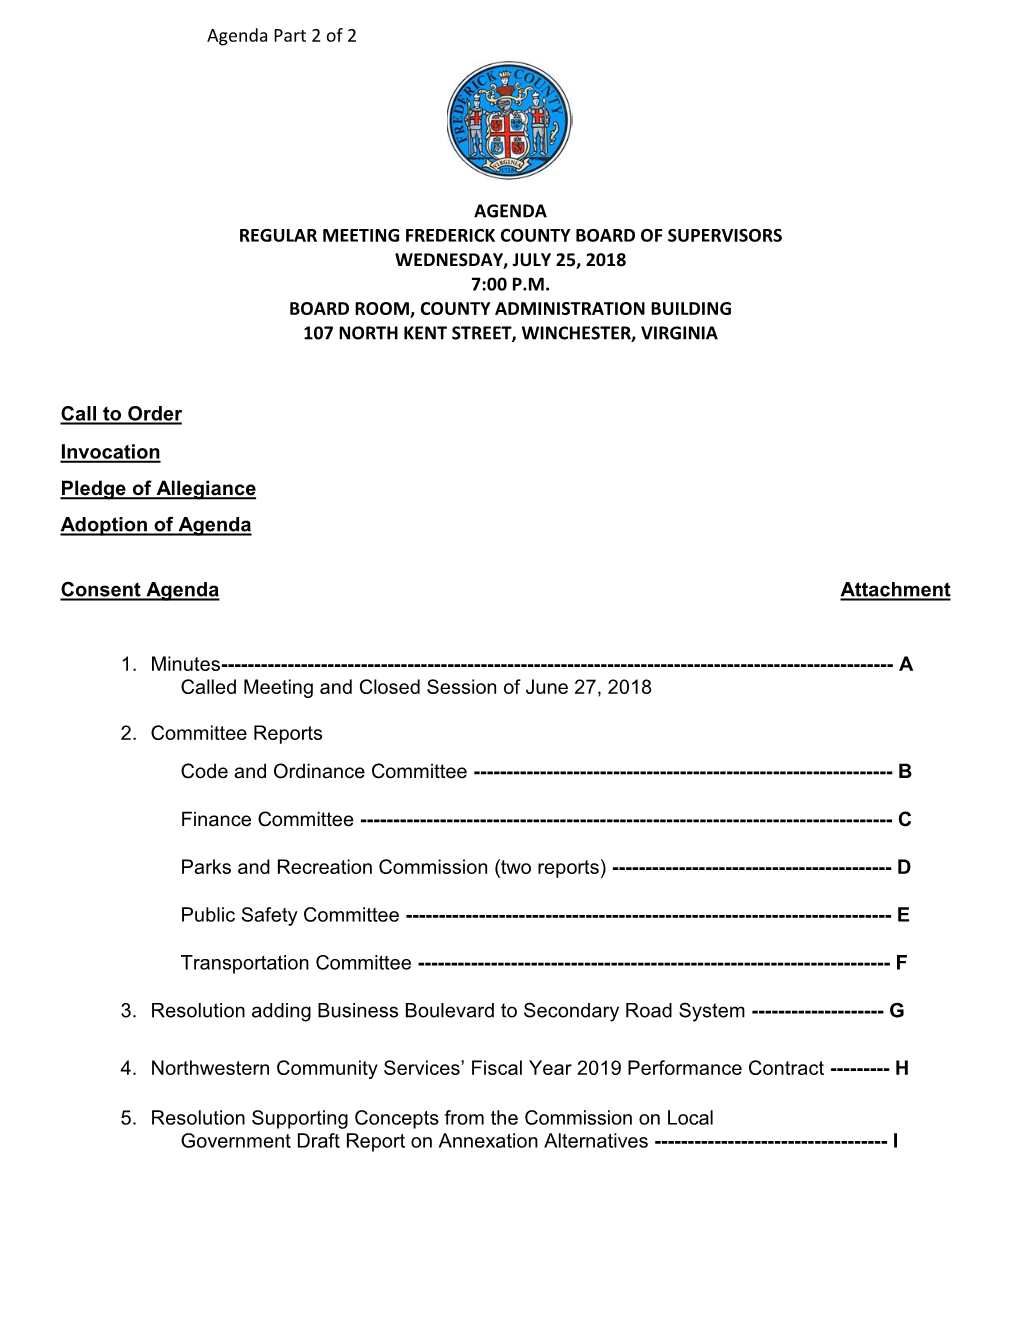 Agenda Regular Meeting Frederick County Board of Supervisors Wednesday, July 25, 2018 7:00 P.M